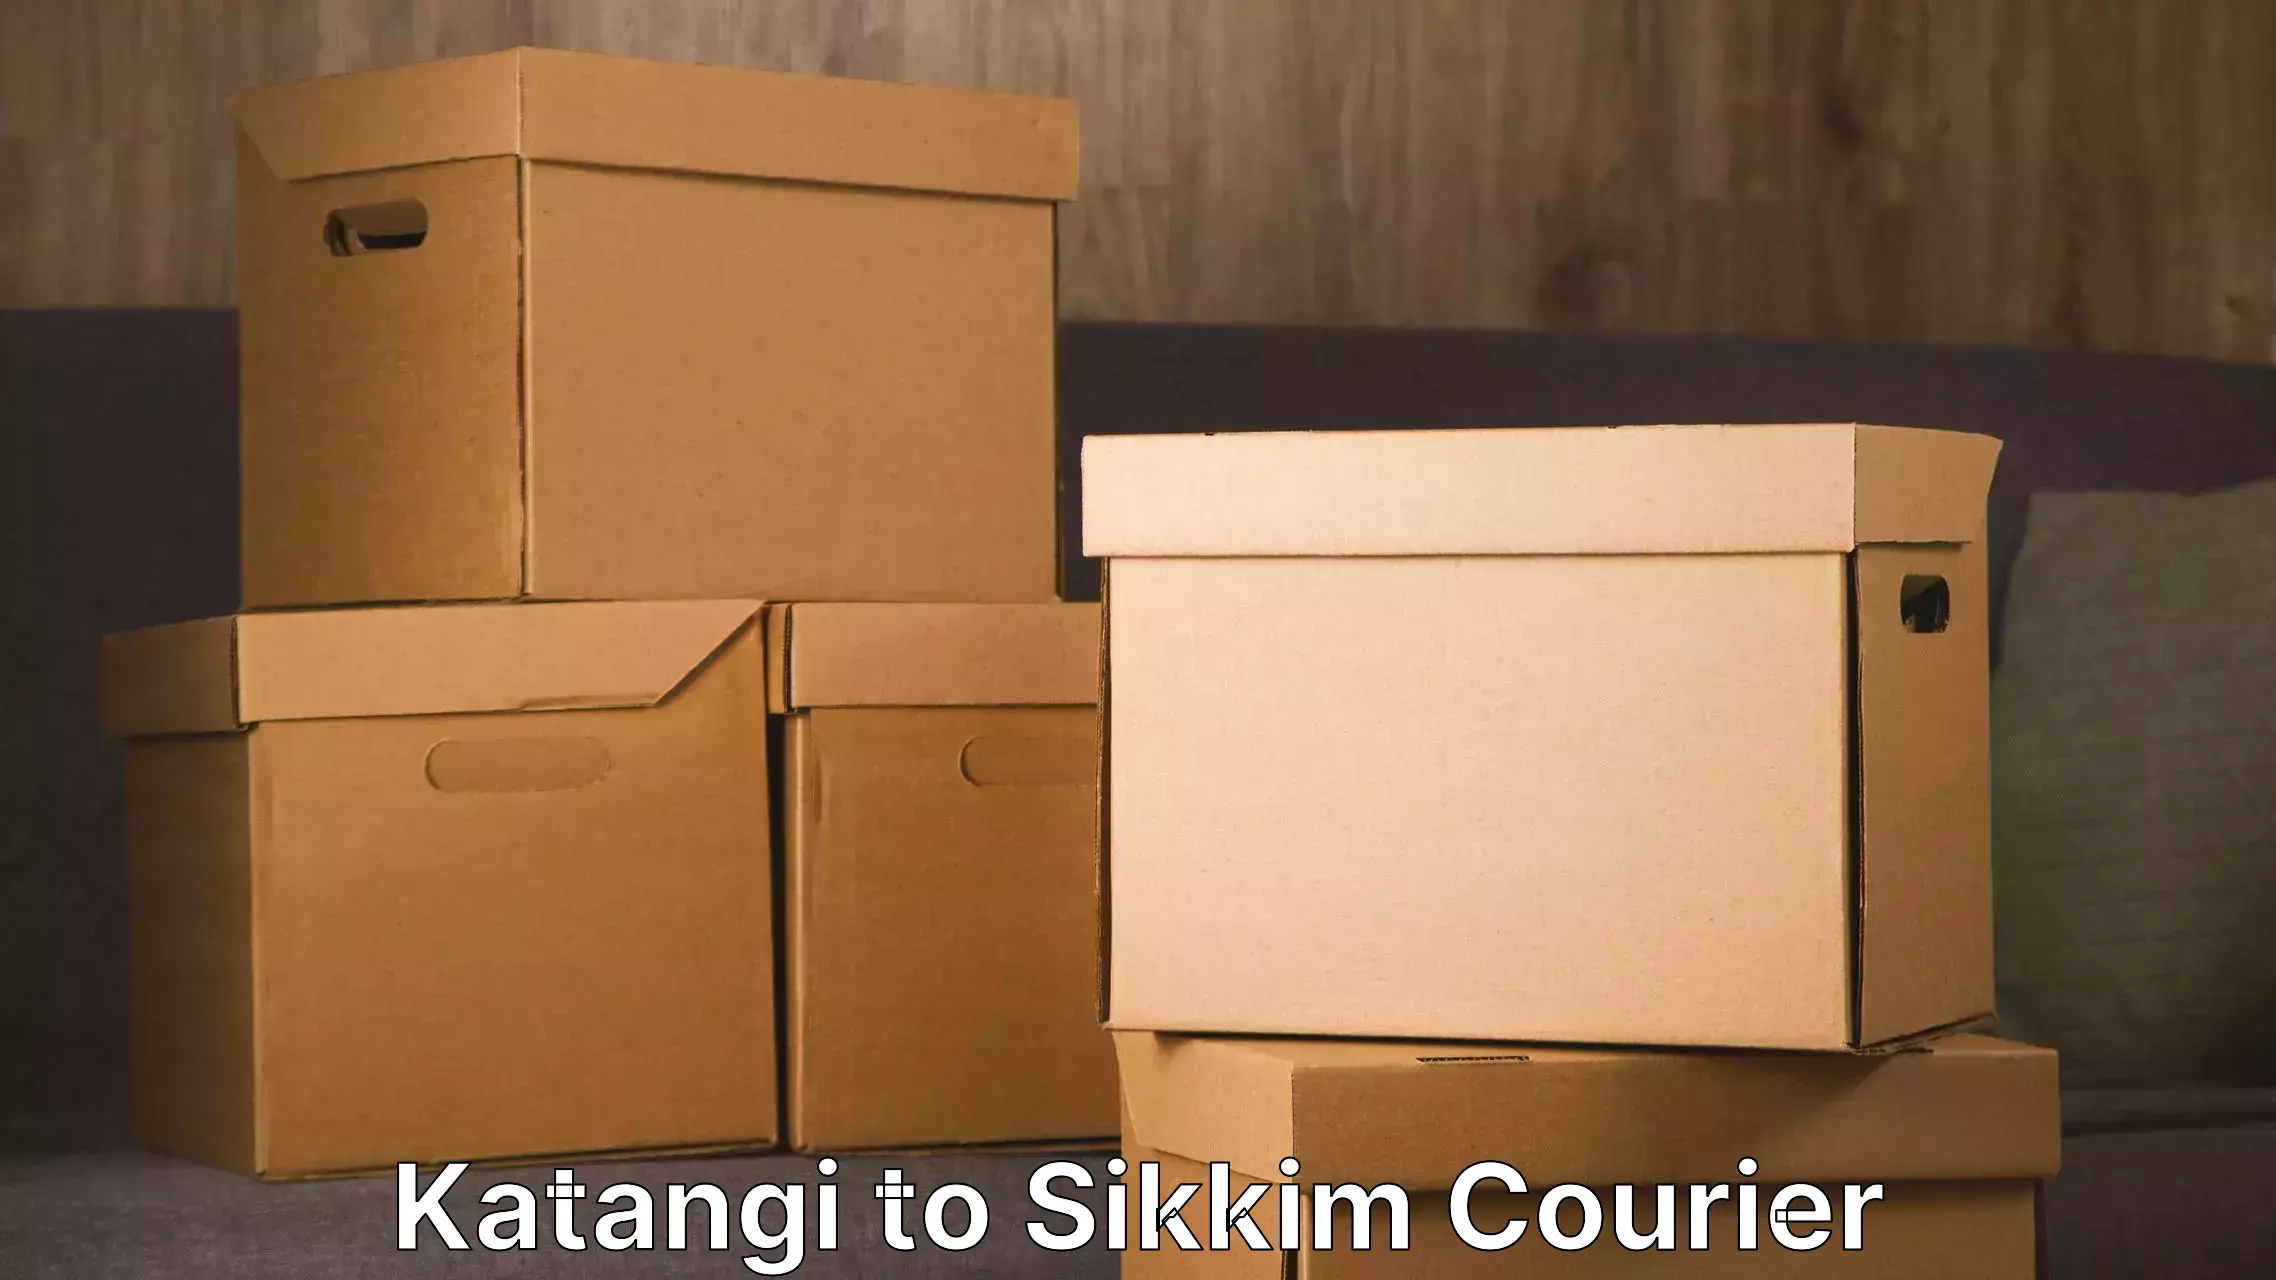 Efficient moving company Katangi to Pelling